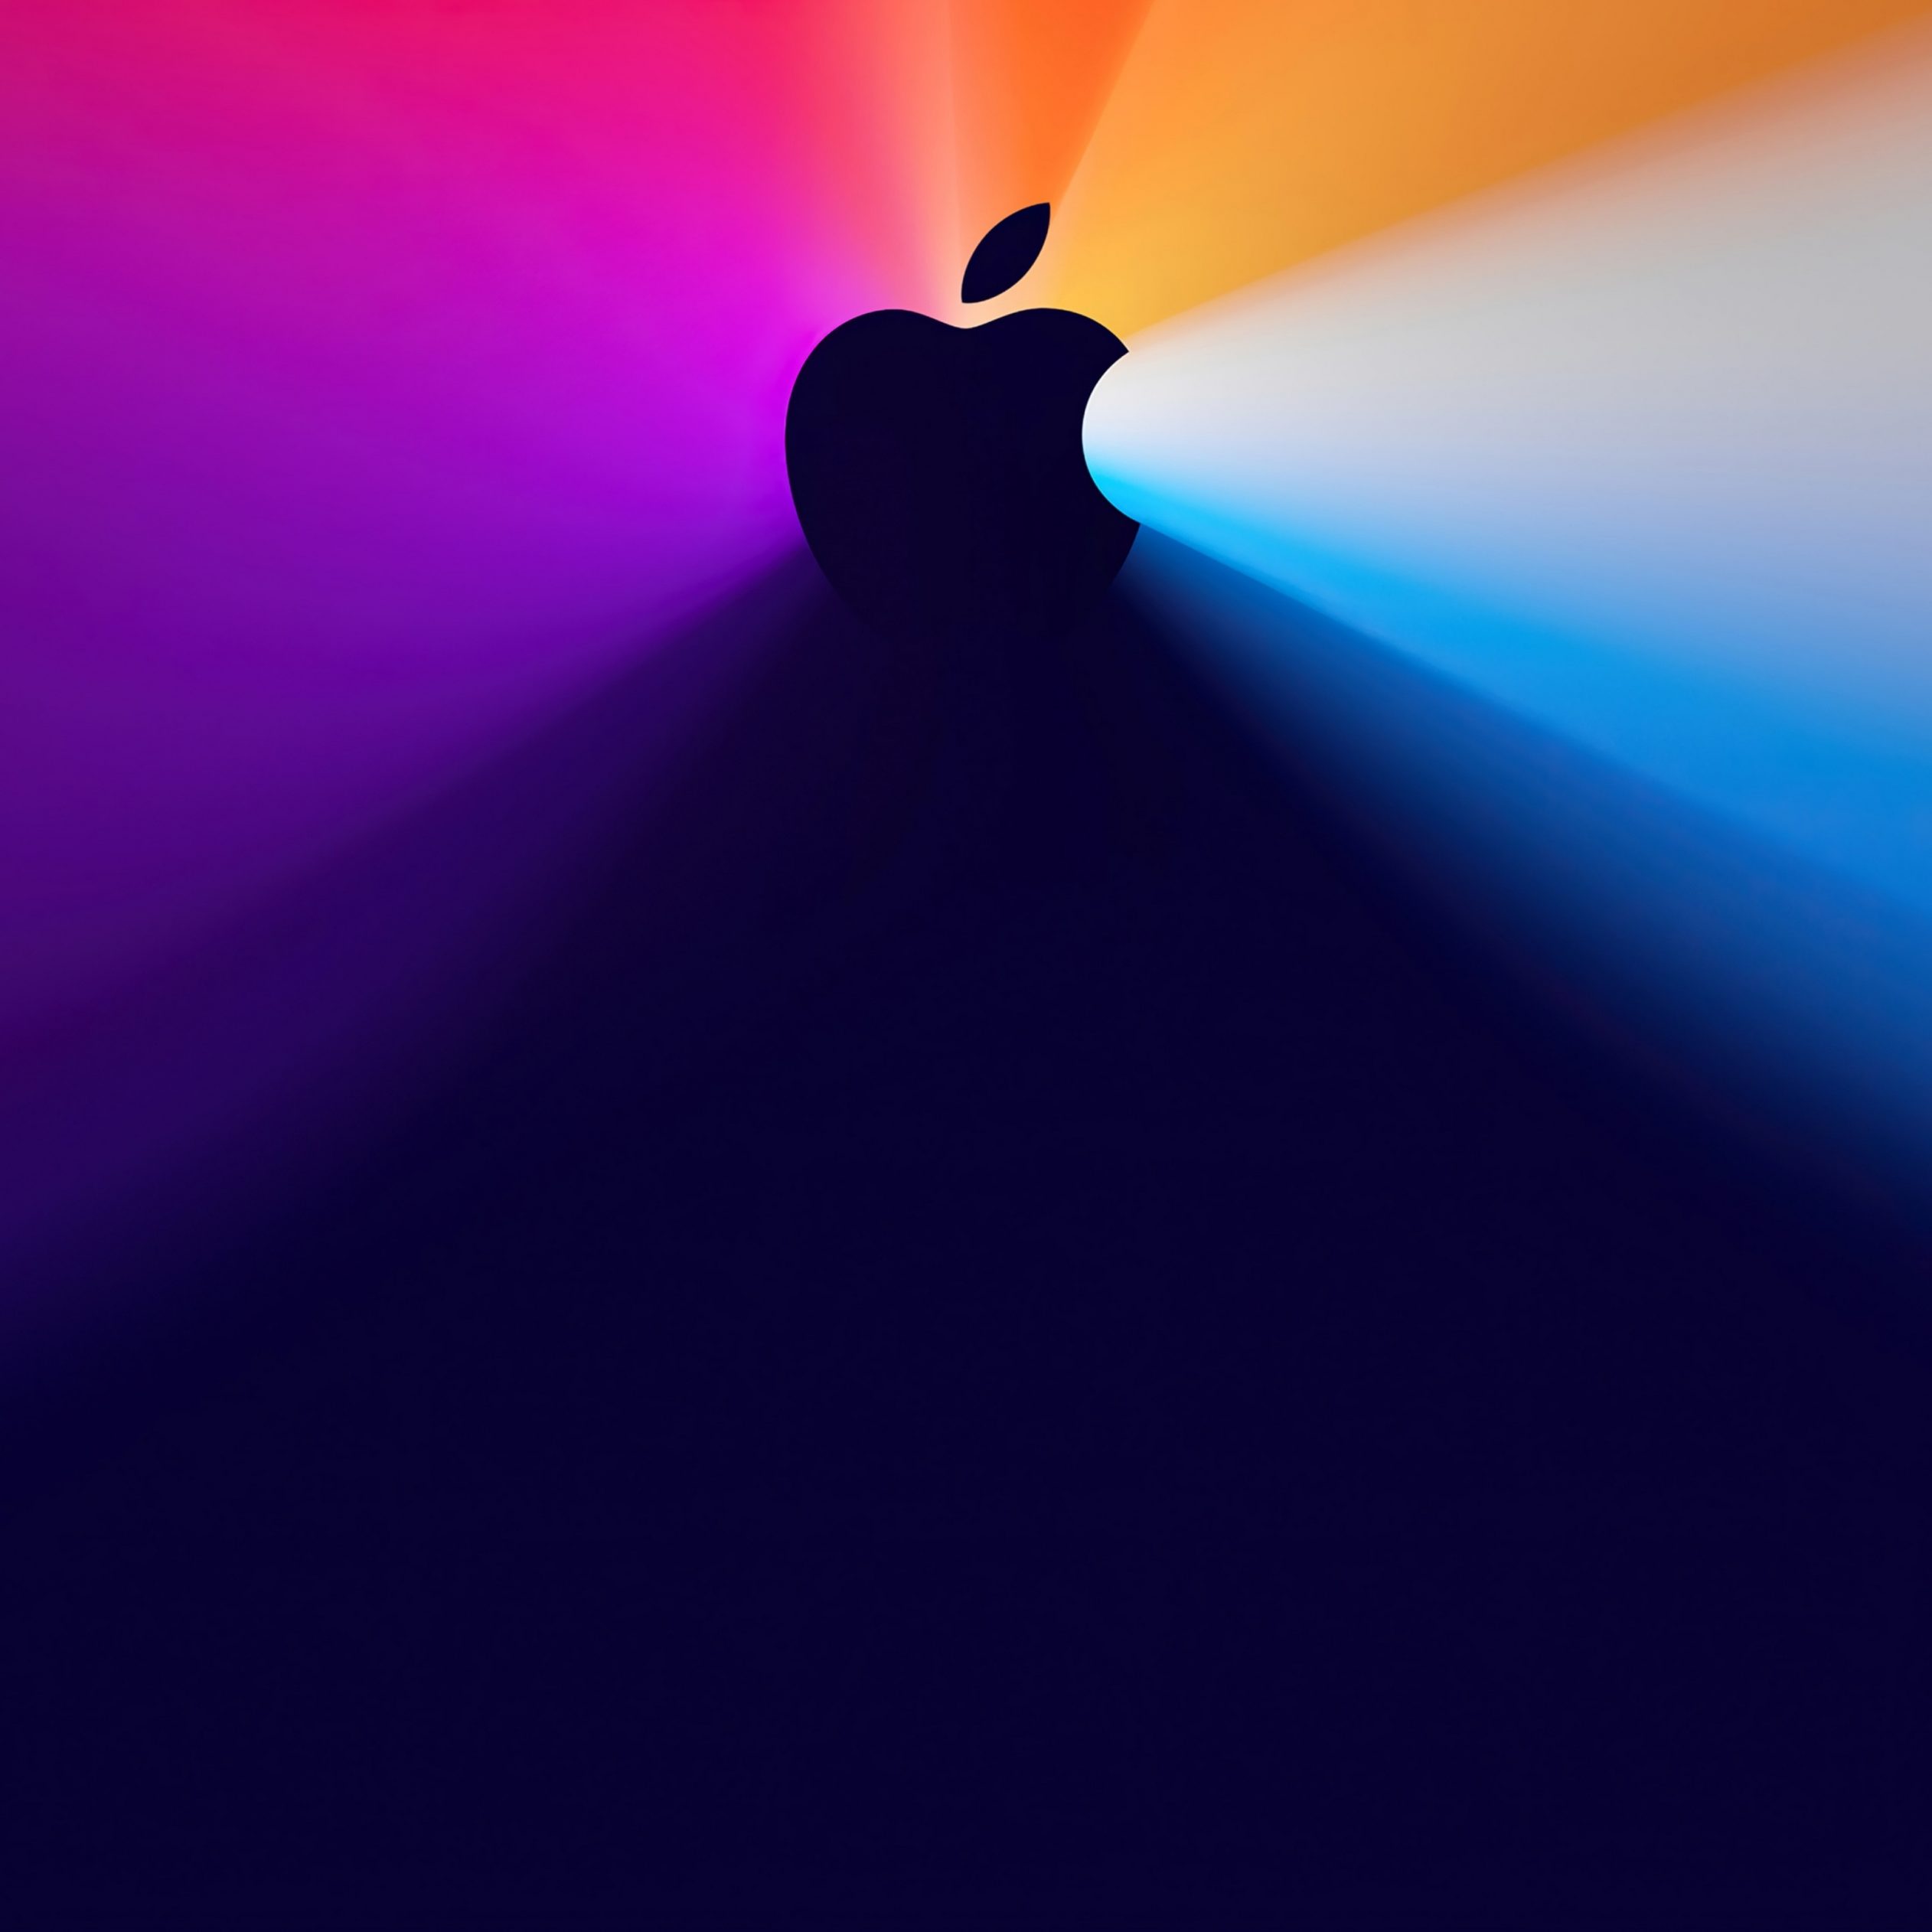 2524x2524 Parallax wallpaper 4k Colourful iPhone 12 Apple Logo iPad Wallpaper 2524x2524 pixels resolution